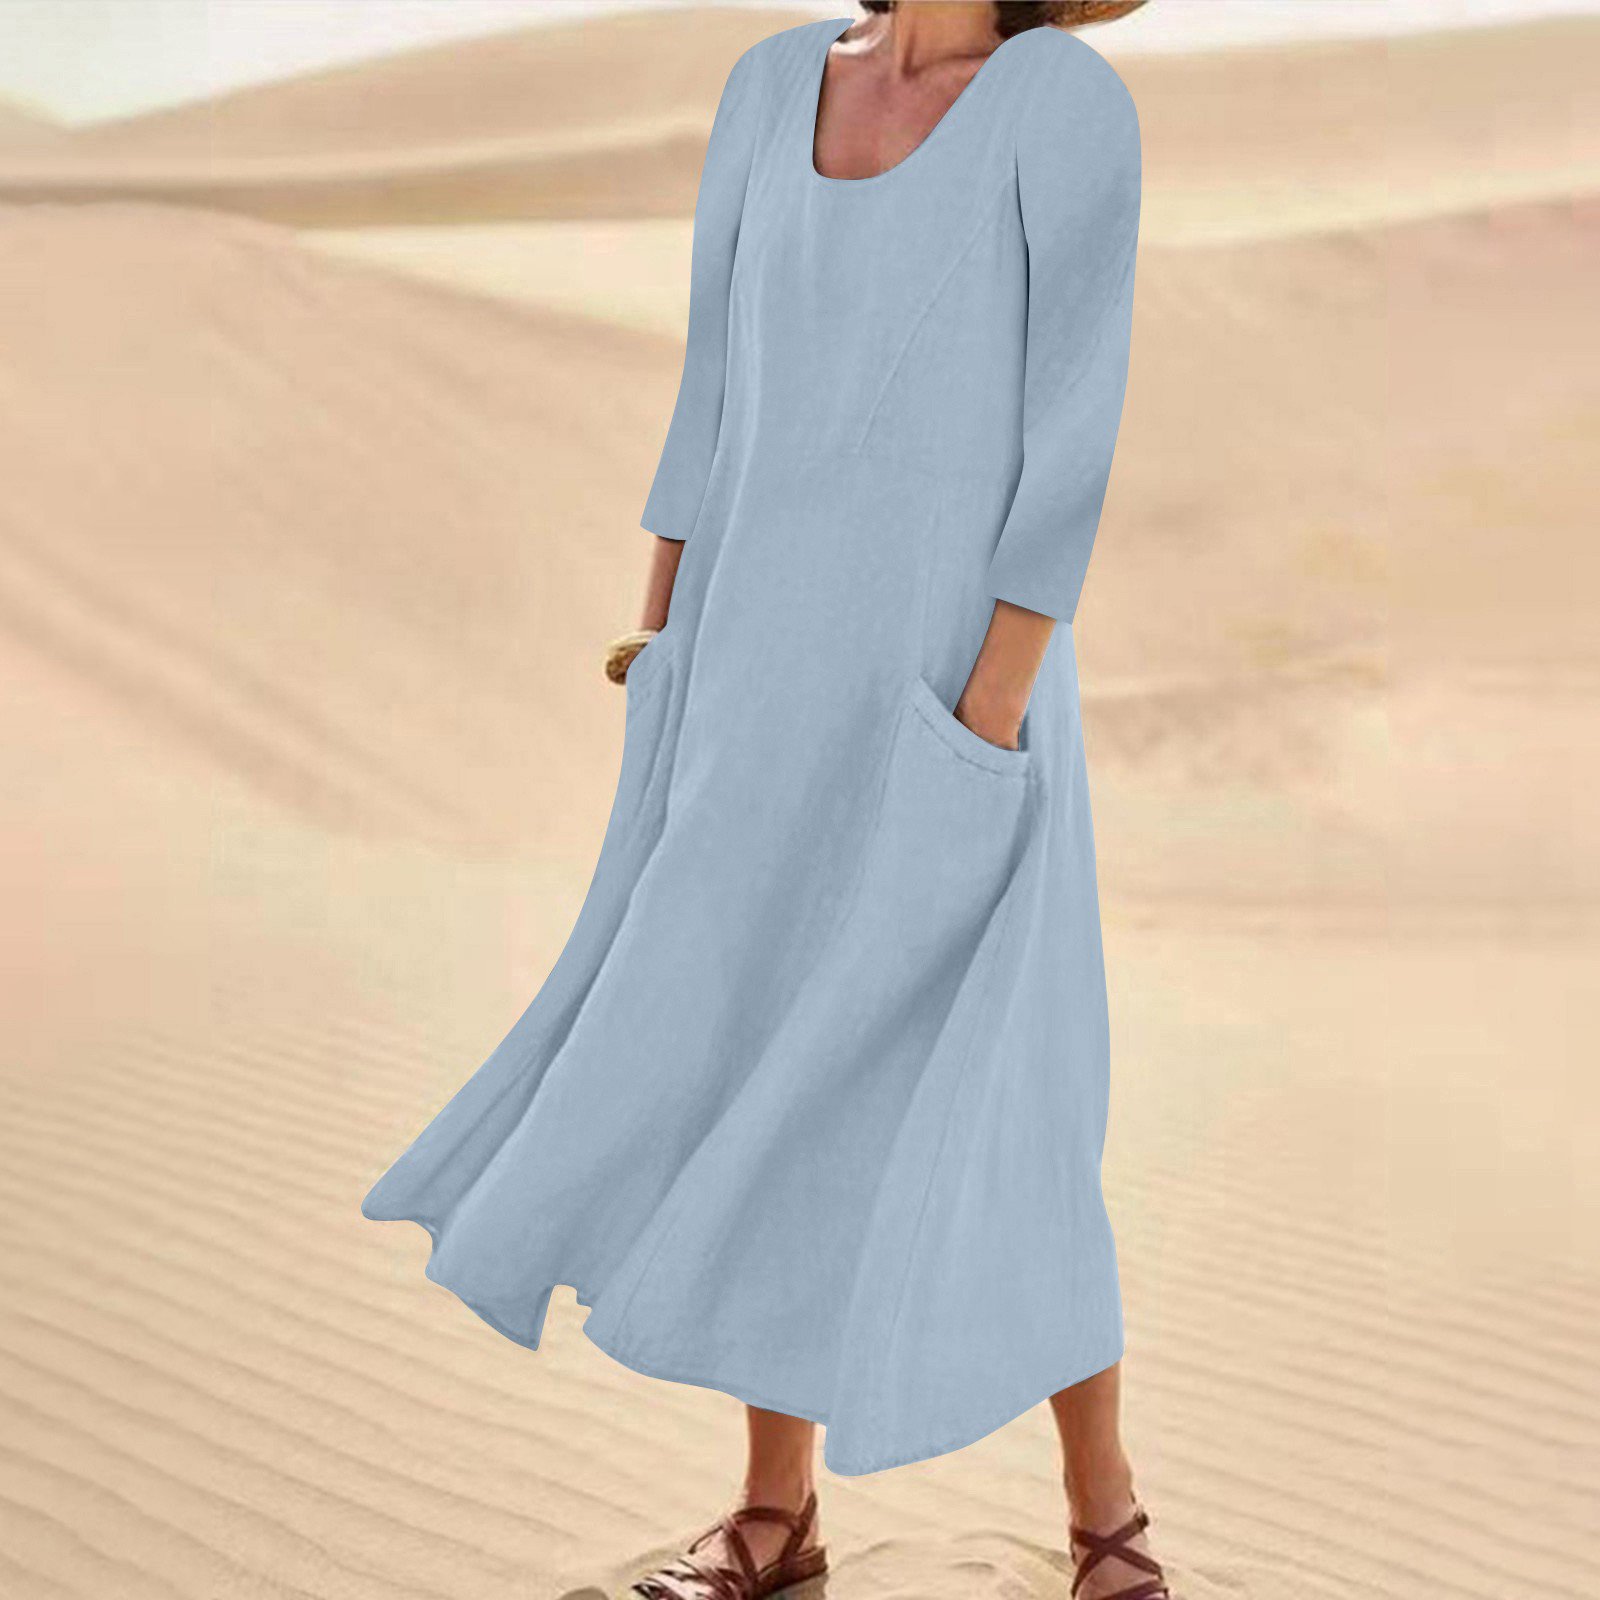 SHUDAGENG Plus Size Summer Dresses Fashion Casual Solid Colour Sleeve Cotton Linen Pocket